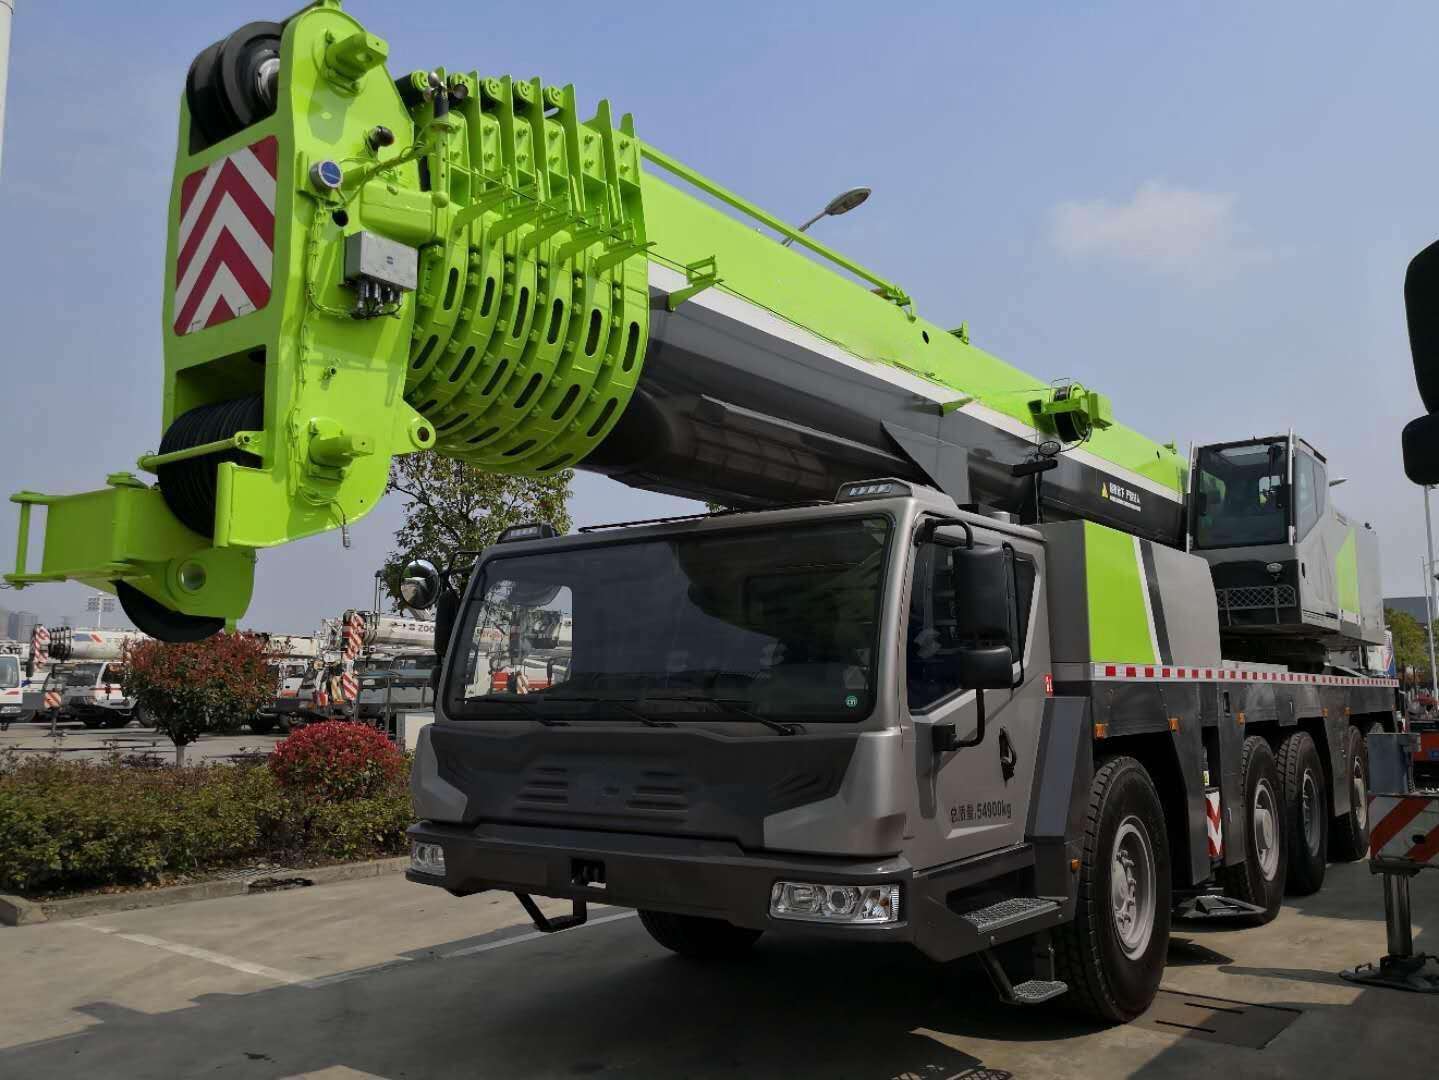 ZAT1100V Mobile Truck Crane with Inspection Checklist details